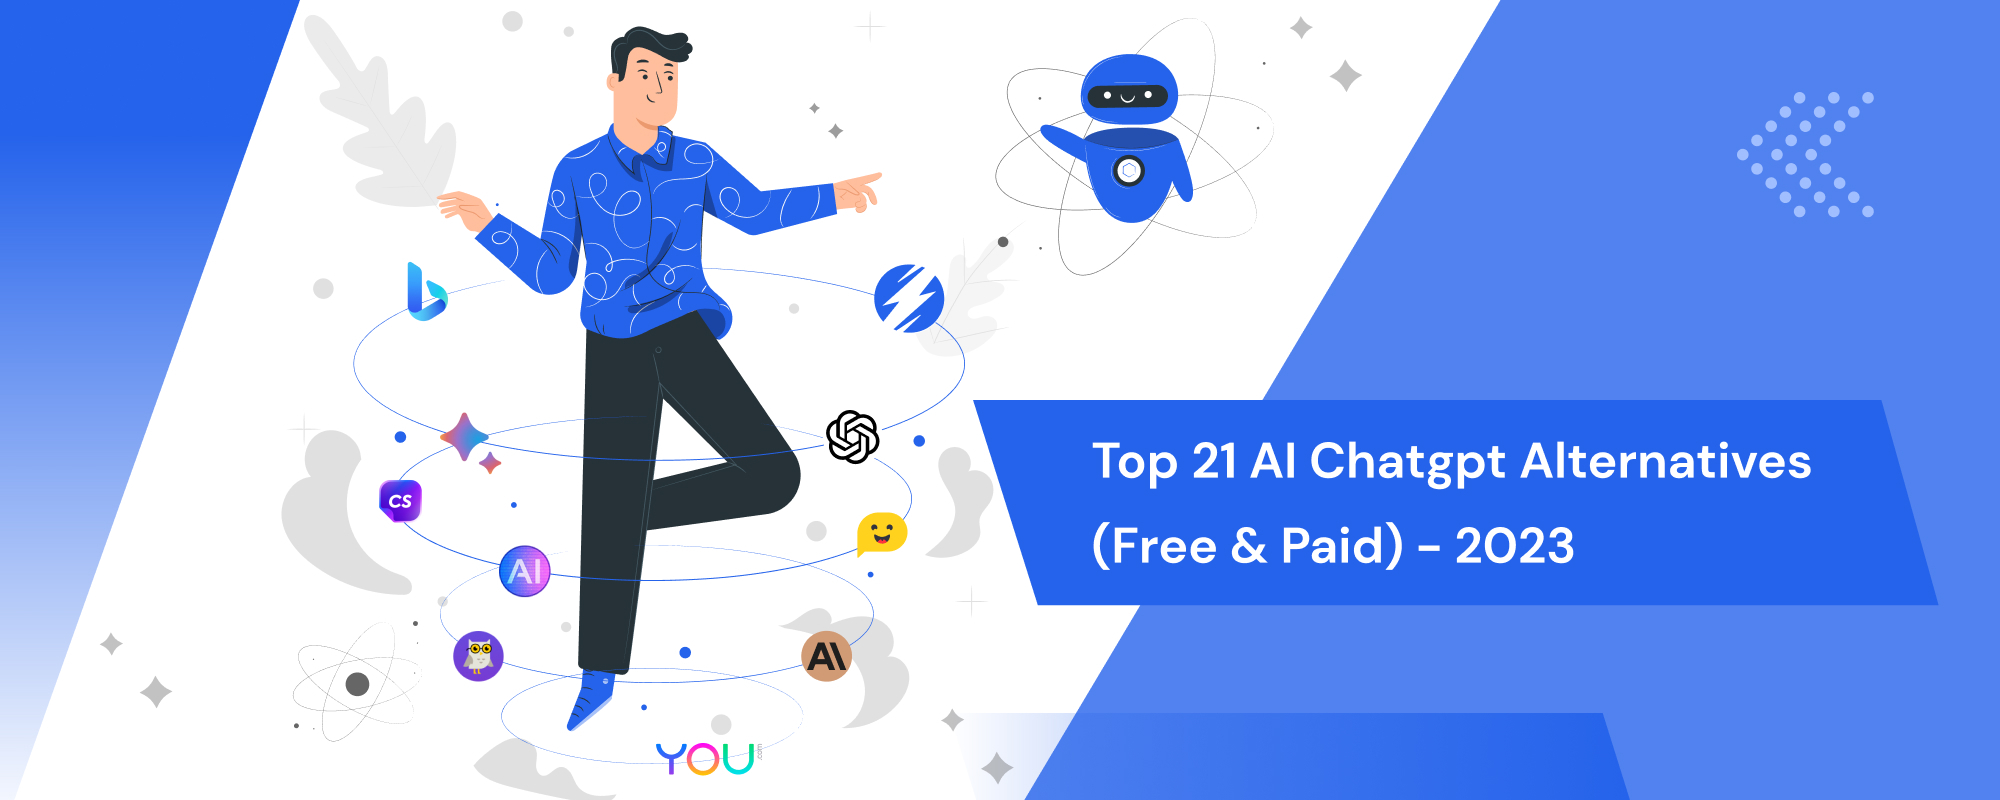 Top 21 AI Chatgpt alternatives (Free & Paid) - 2023 